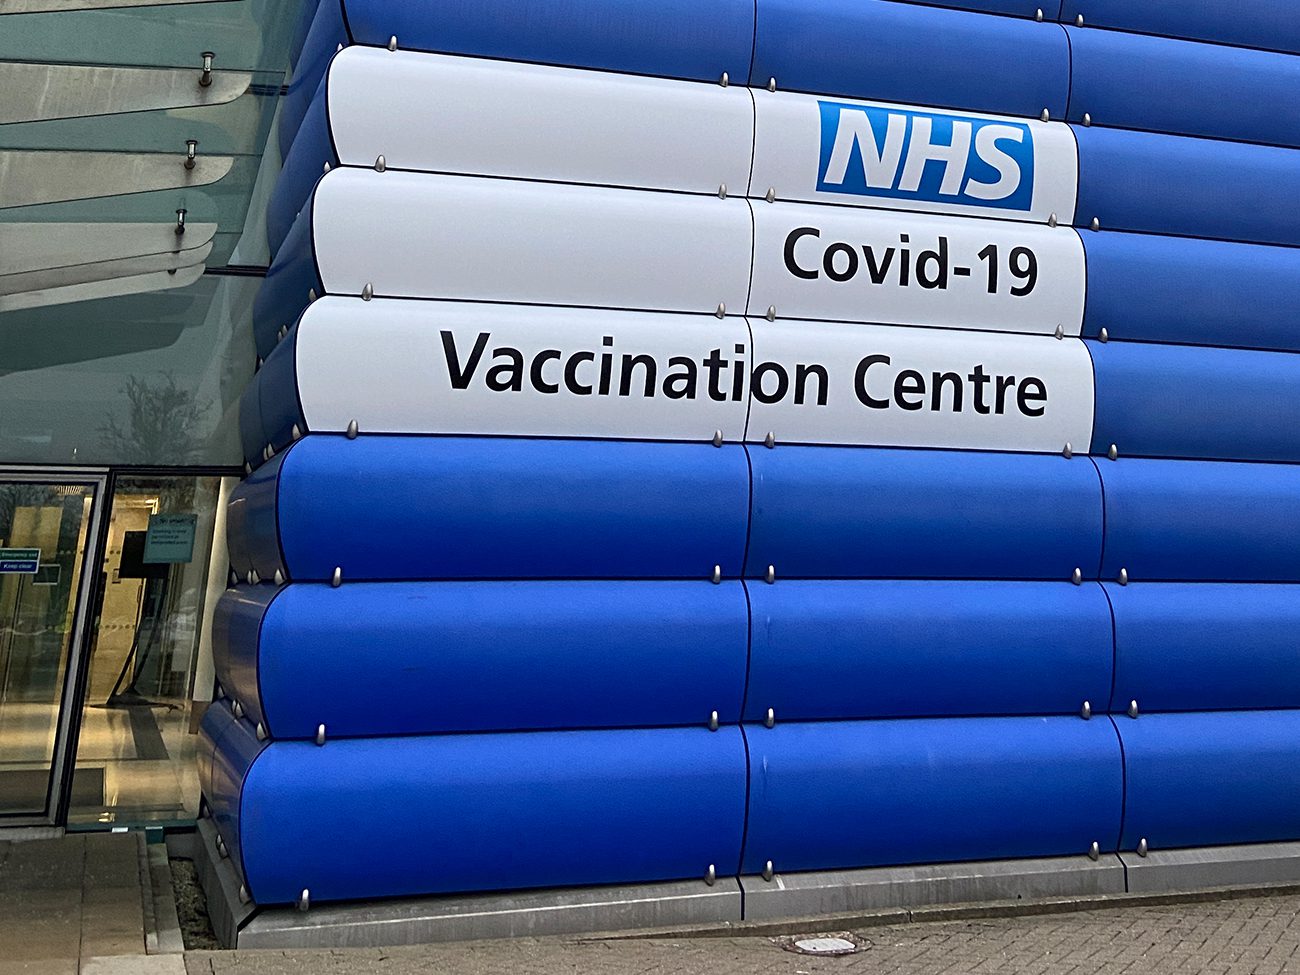 NHS Vaccination Centre Destination Branding